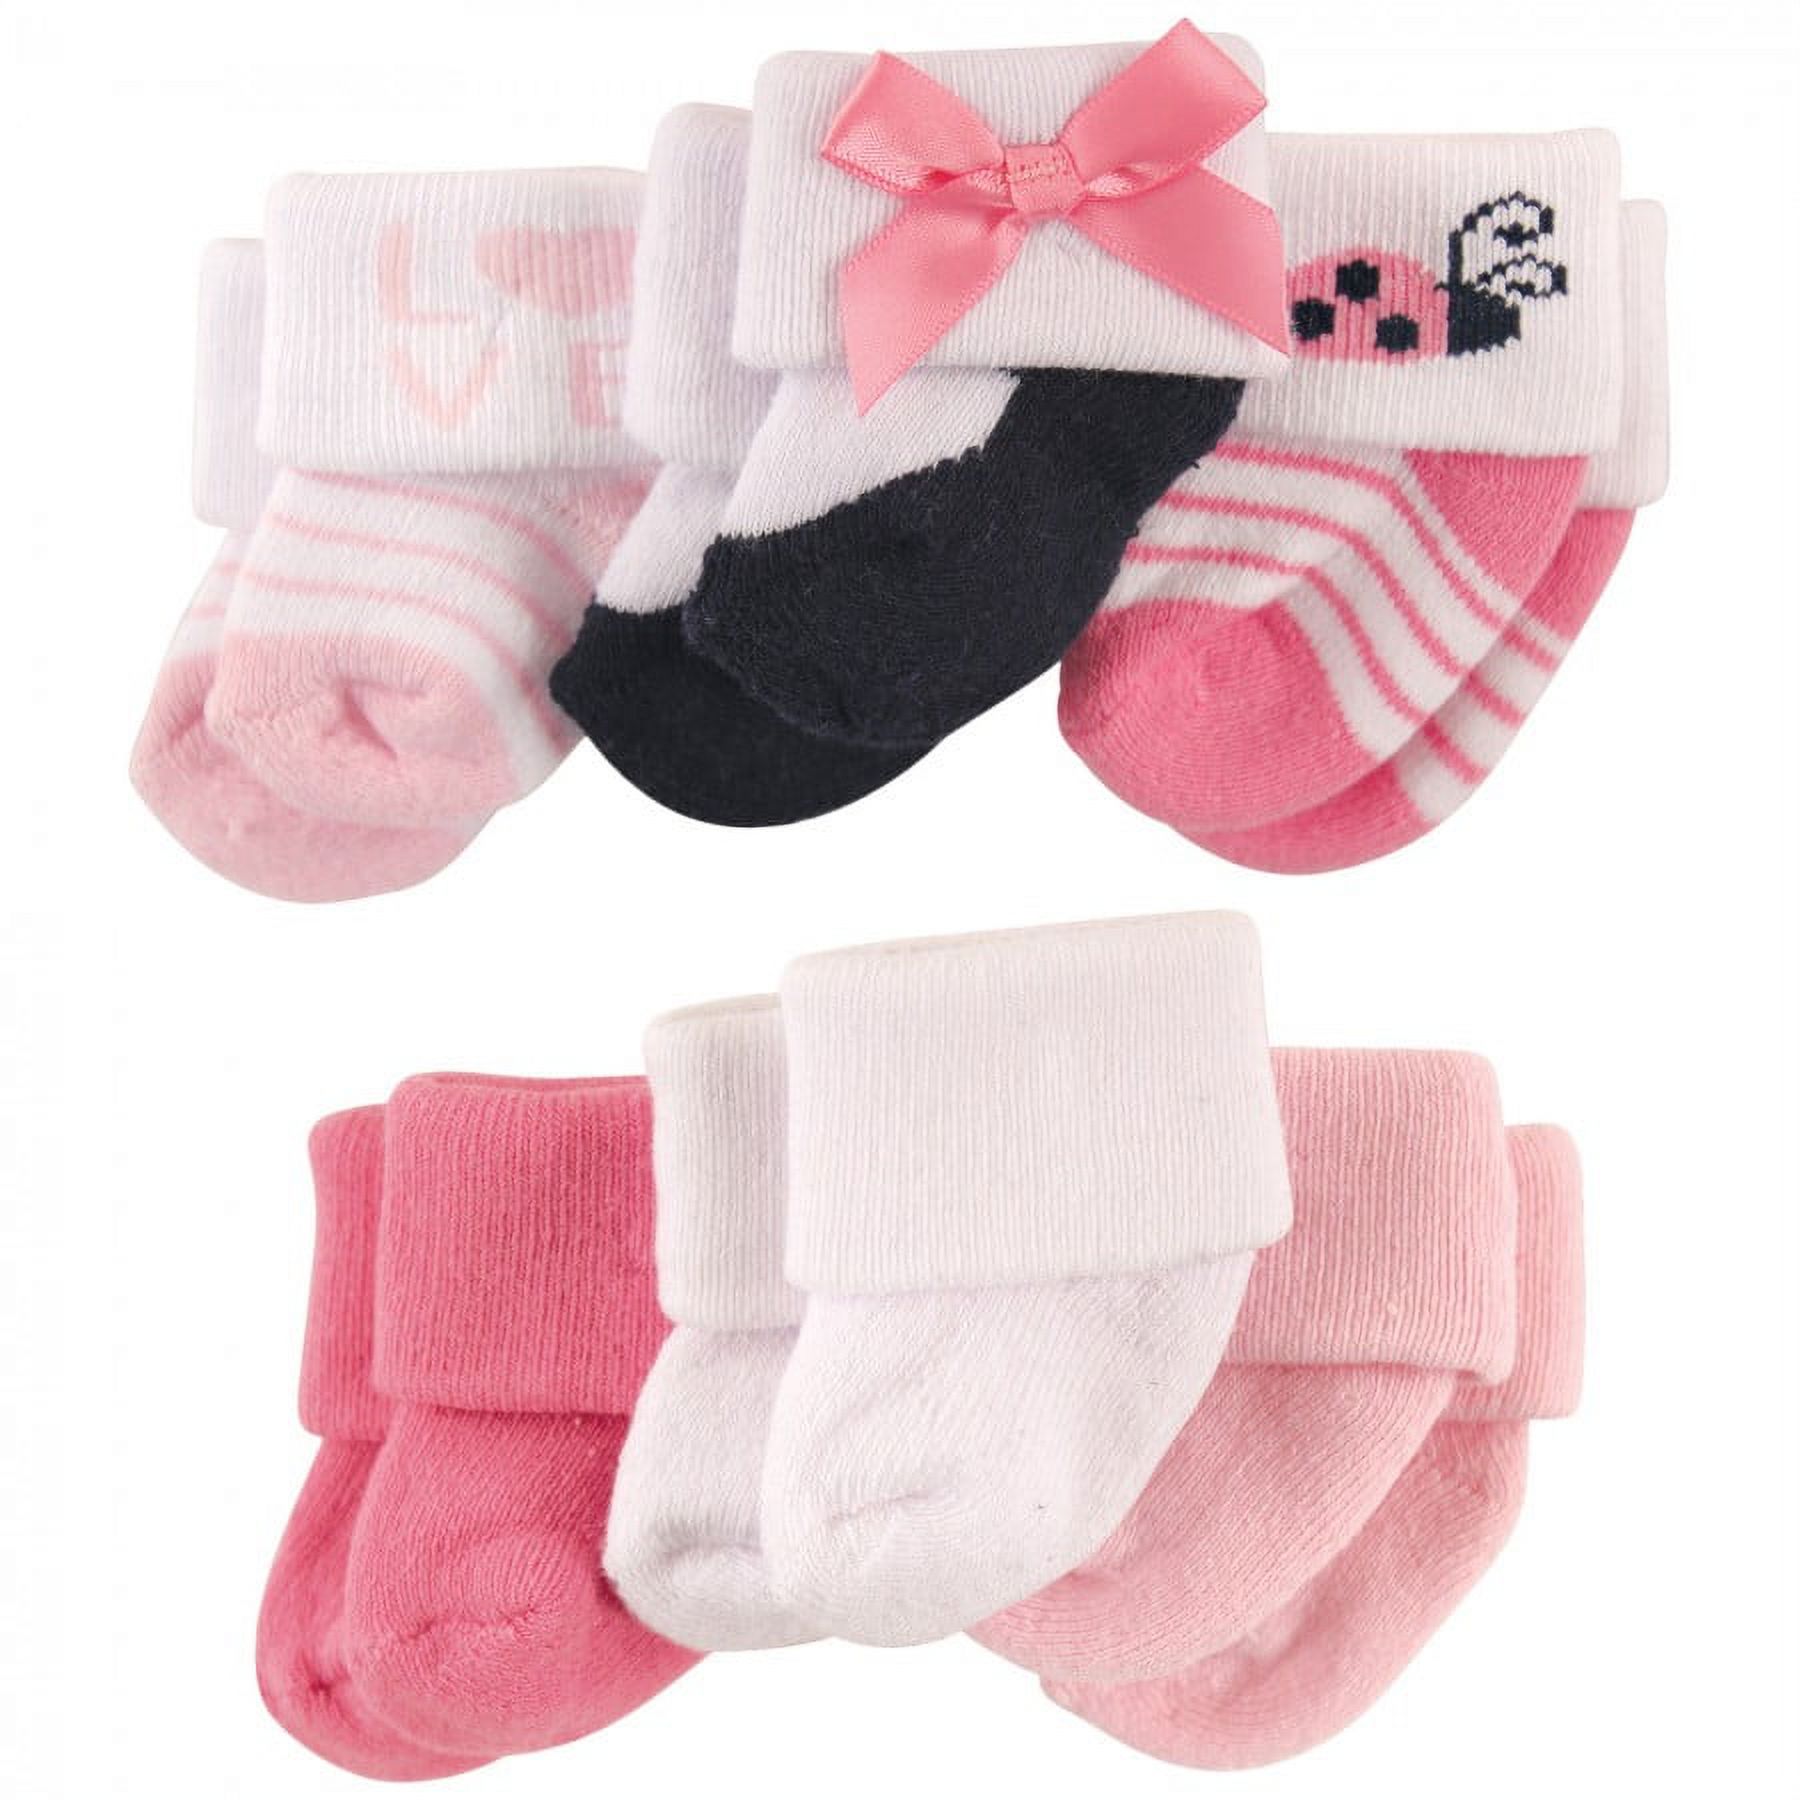 Luvable Friends Baby Girl Newborn and Baby Socks Set, Ladybug, 0-3 Months - image 1 of 2